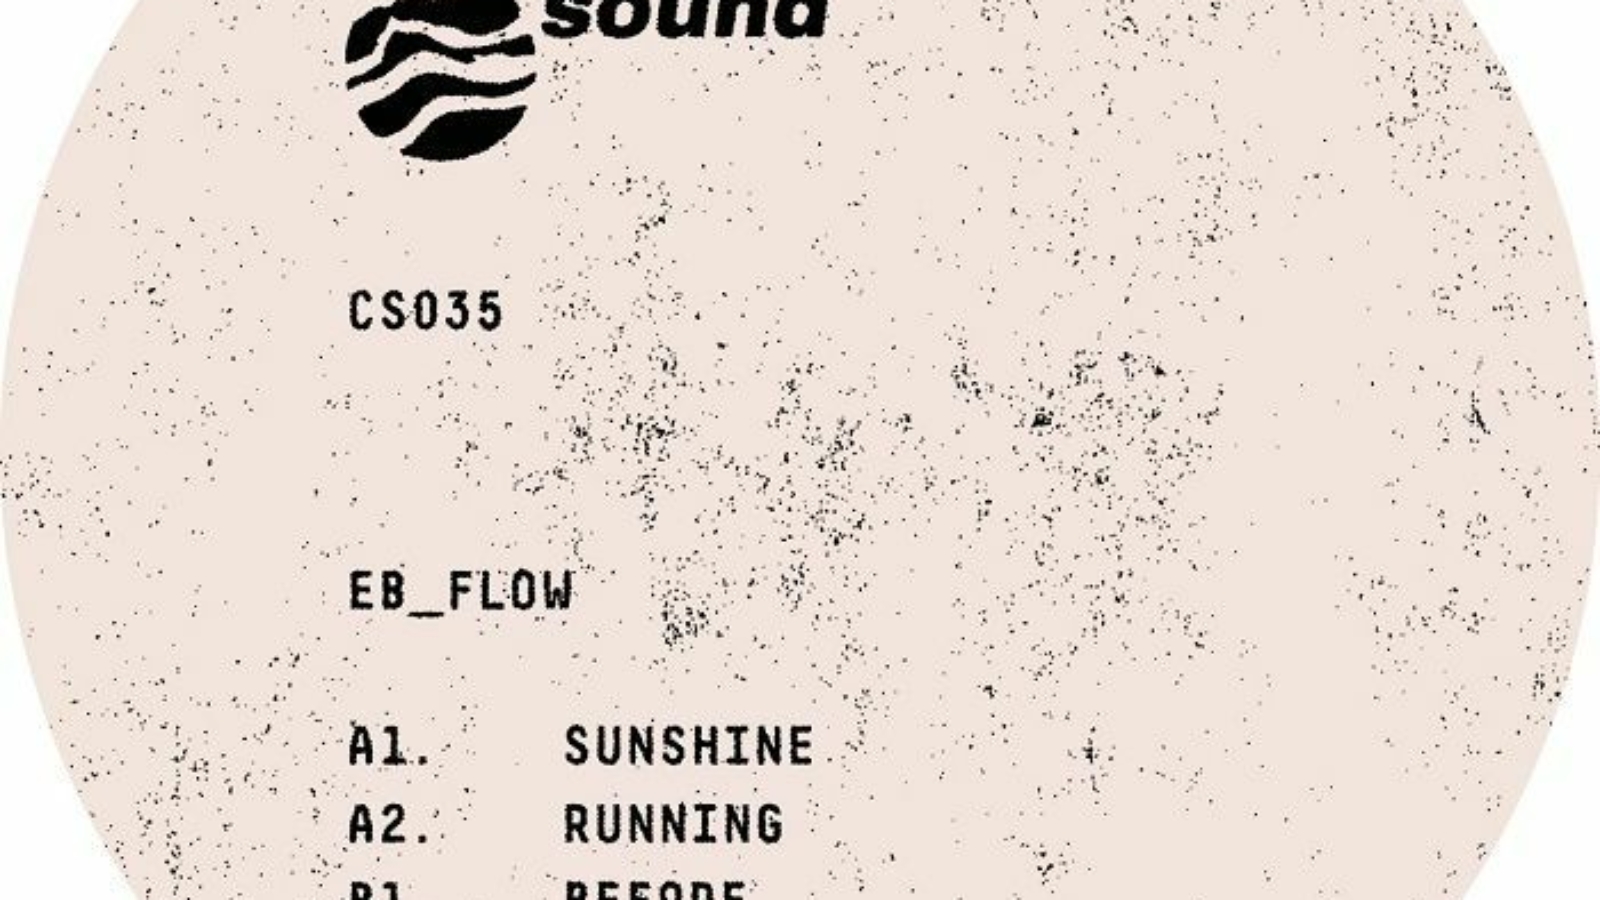 PACK-SHOT-EB_Flow---Sunshine-EP---Constant-Sound